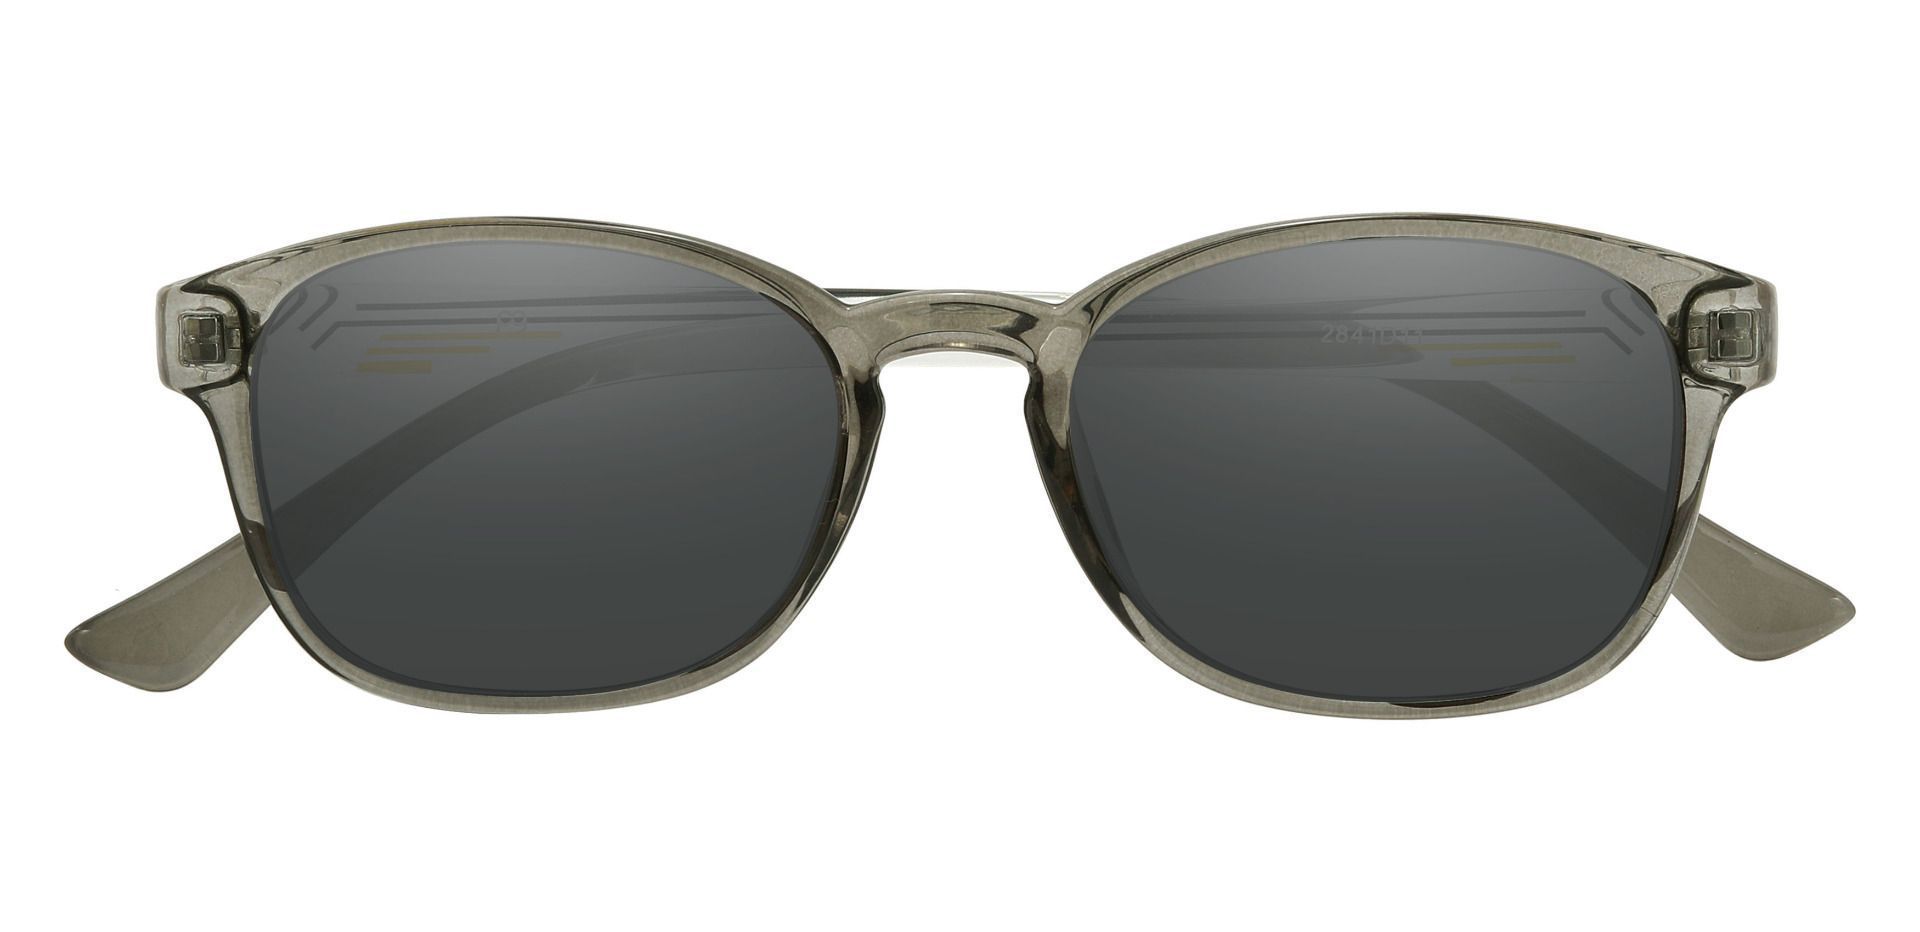 Casper Rectangle Prescription Sunglasses - Gray Frame With Gray Lenses